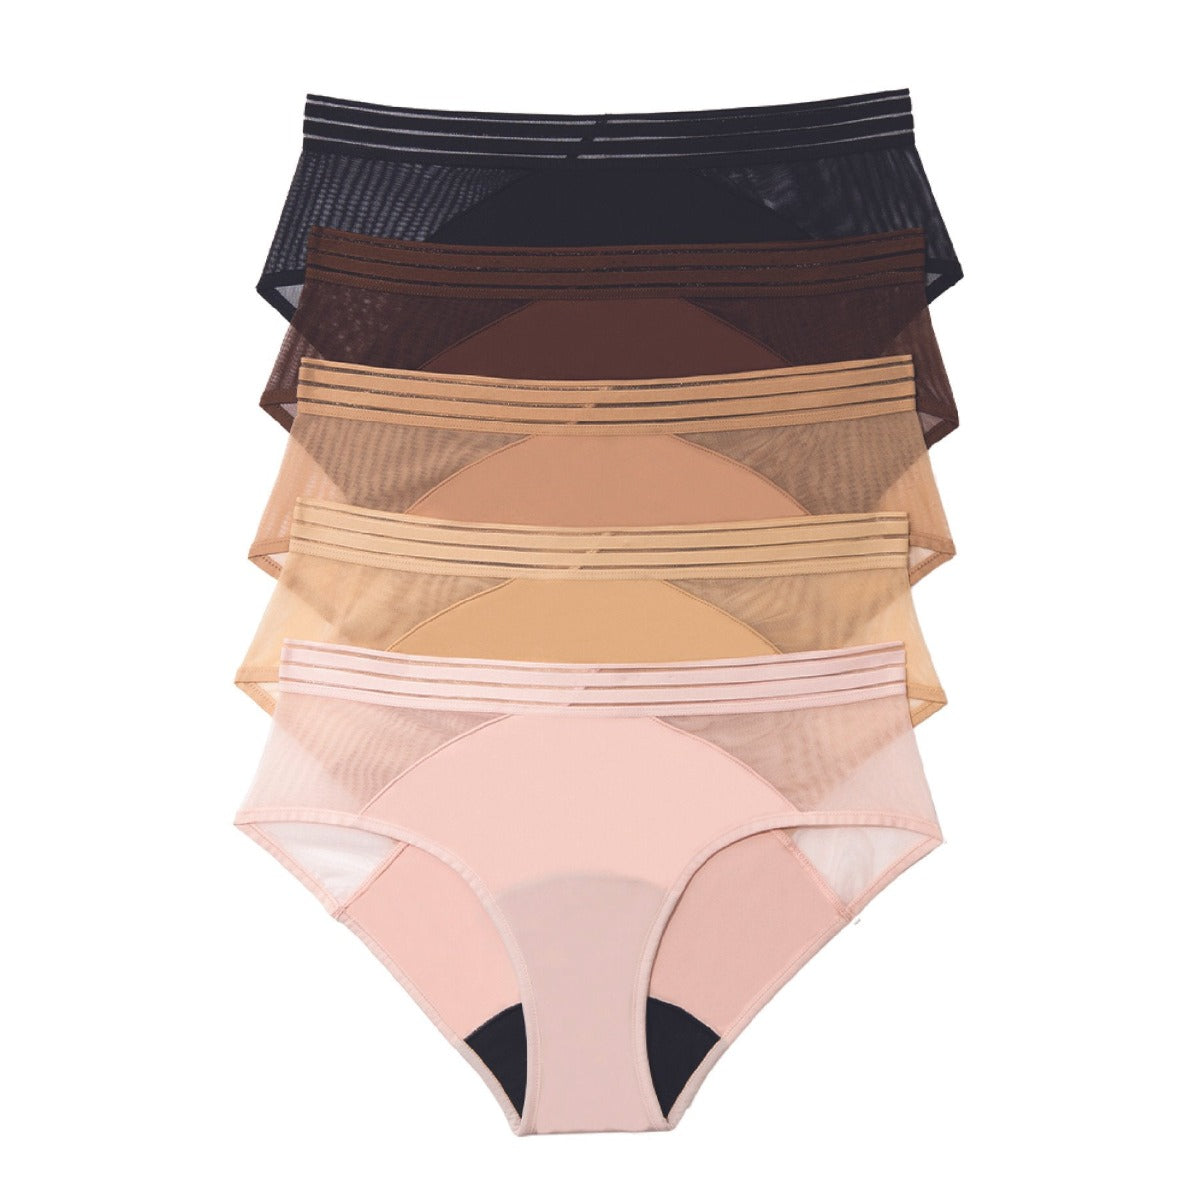 Saalt Period Underwear Elemental Mesh Hipster | Regular Absorbency | The Period Co.